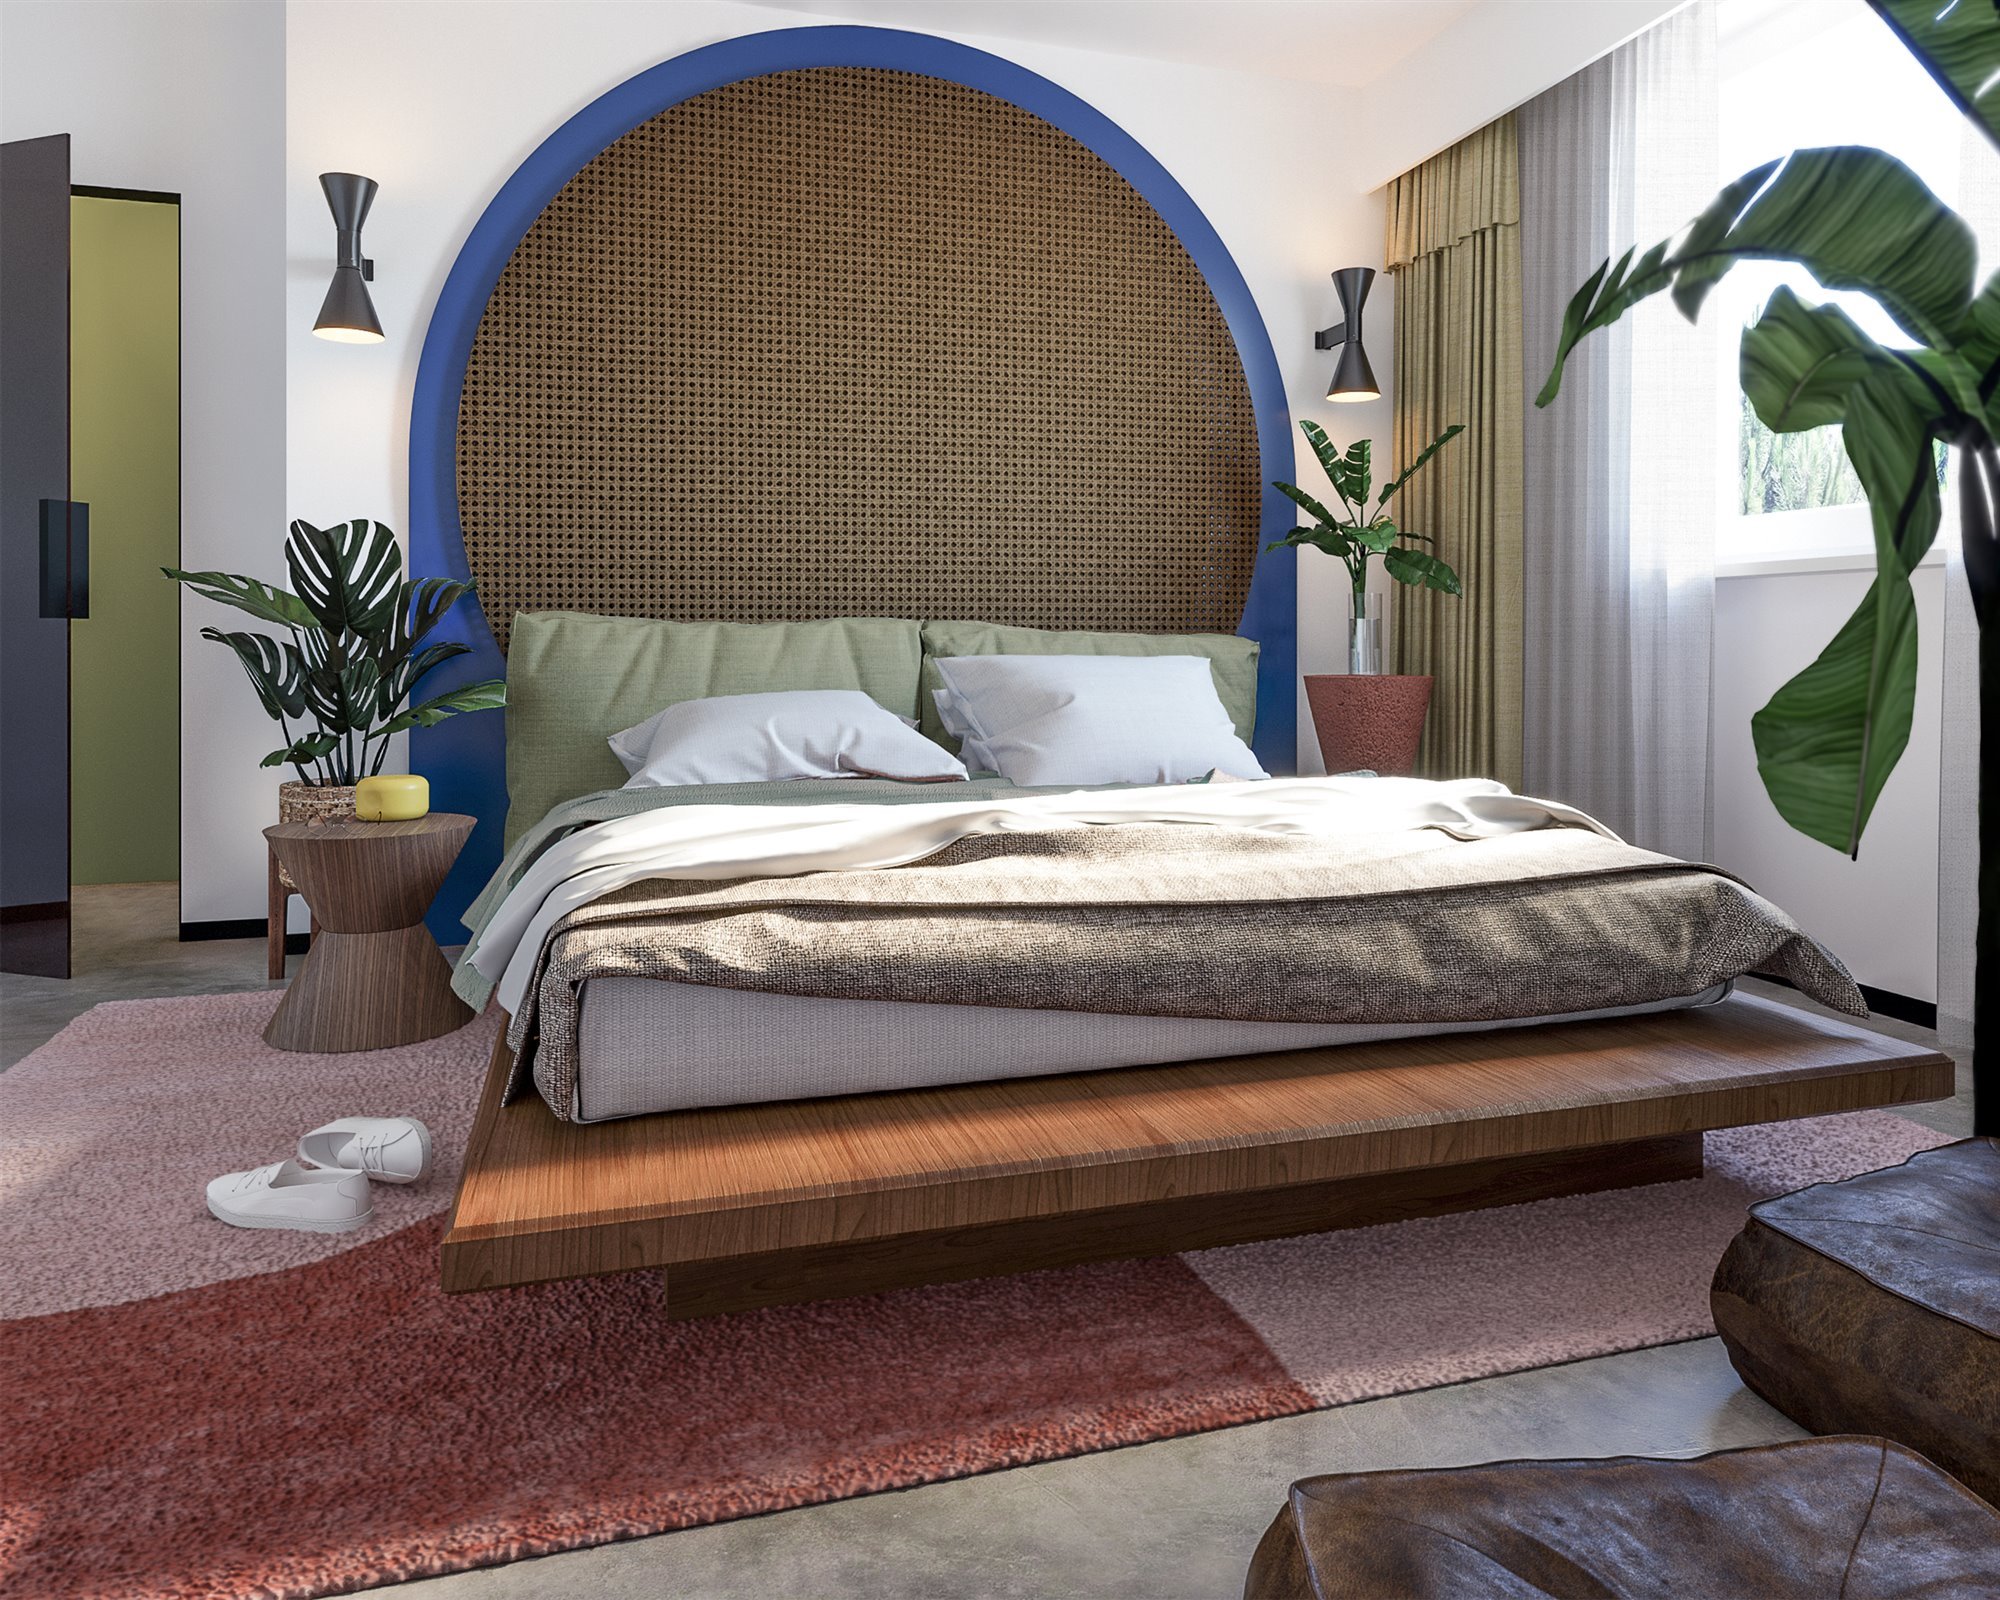 Piso en Roma con decoracion de interiores moderna dormitorio